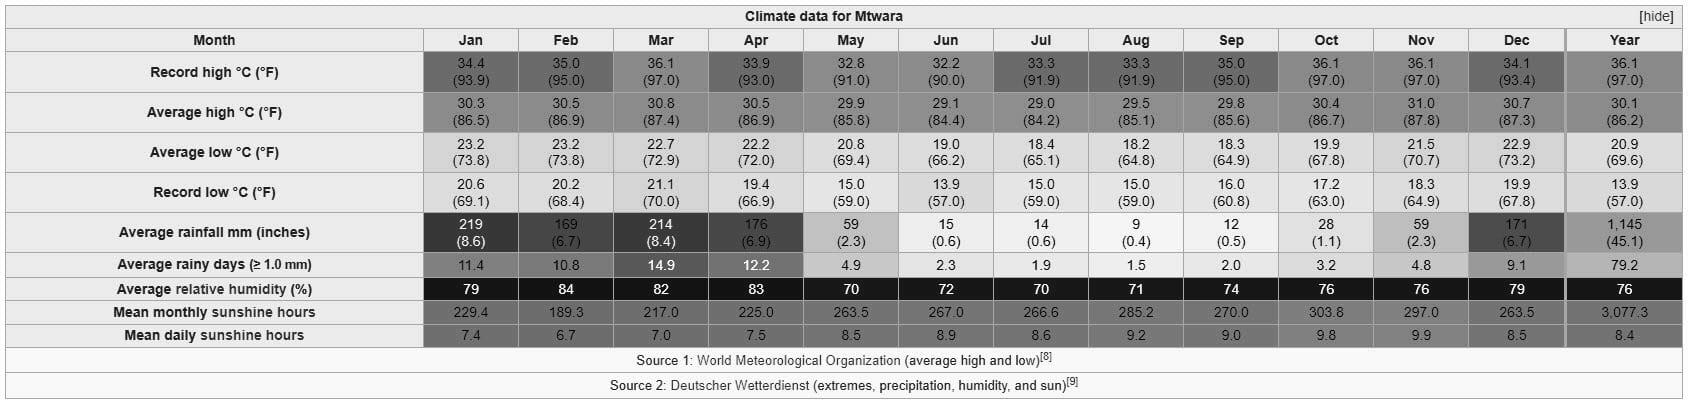 Mtwara Climate Data